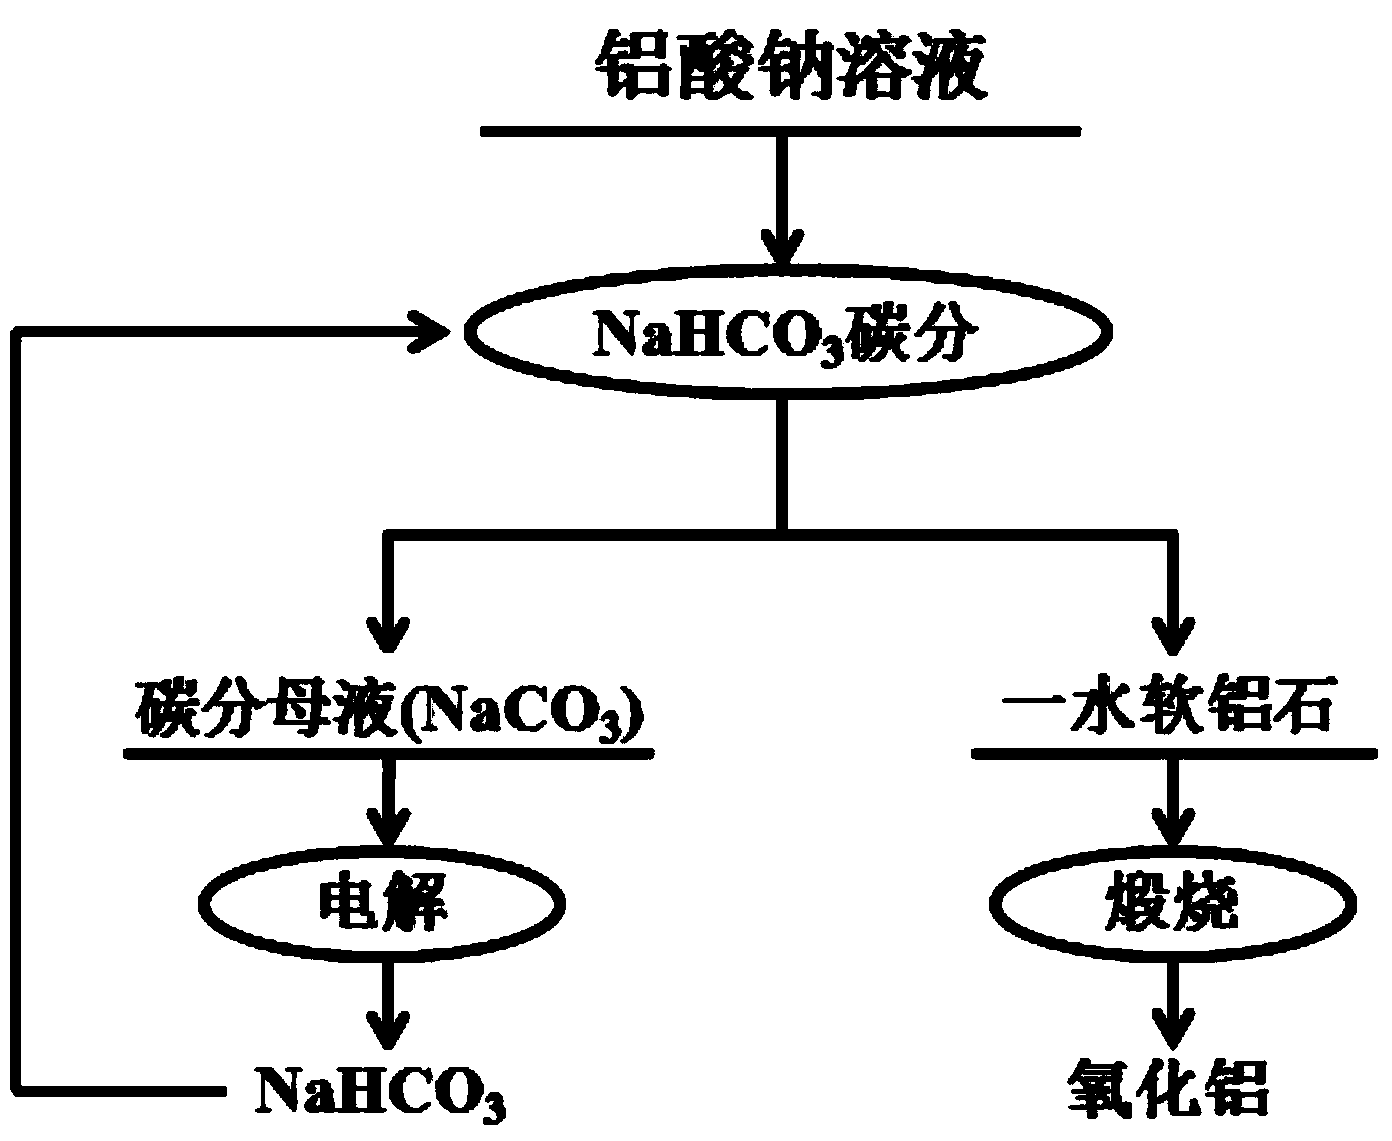 Method for preparing boehmite by liquid phase carbonating decomposition of sodium aluminate solution and sodium bicarbonate